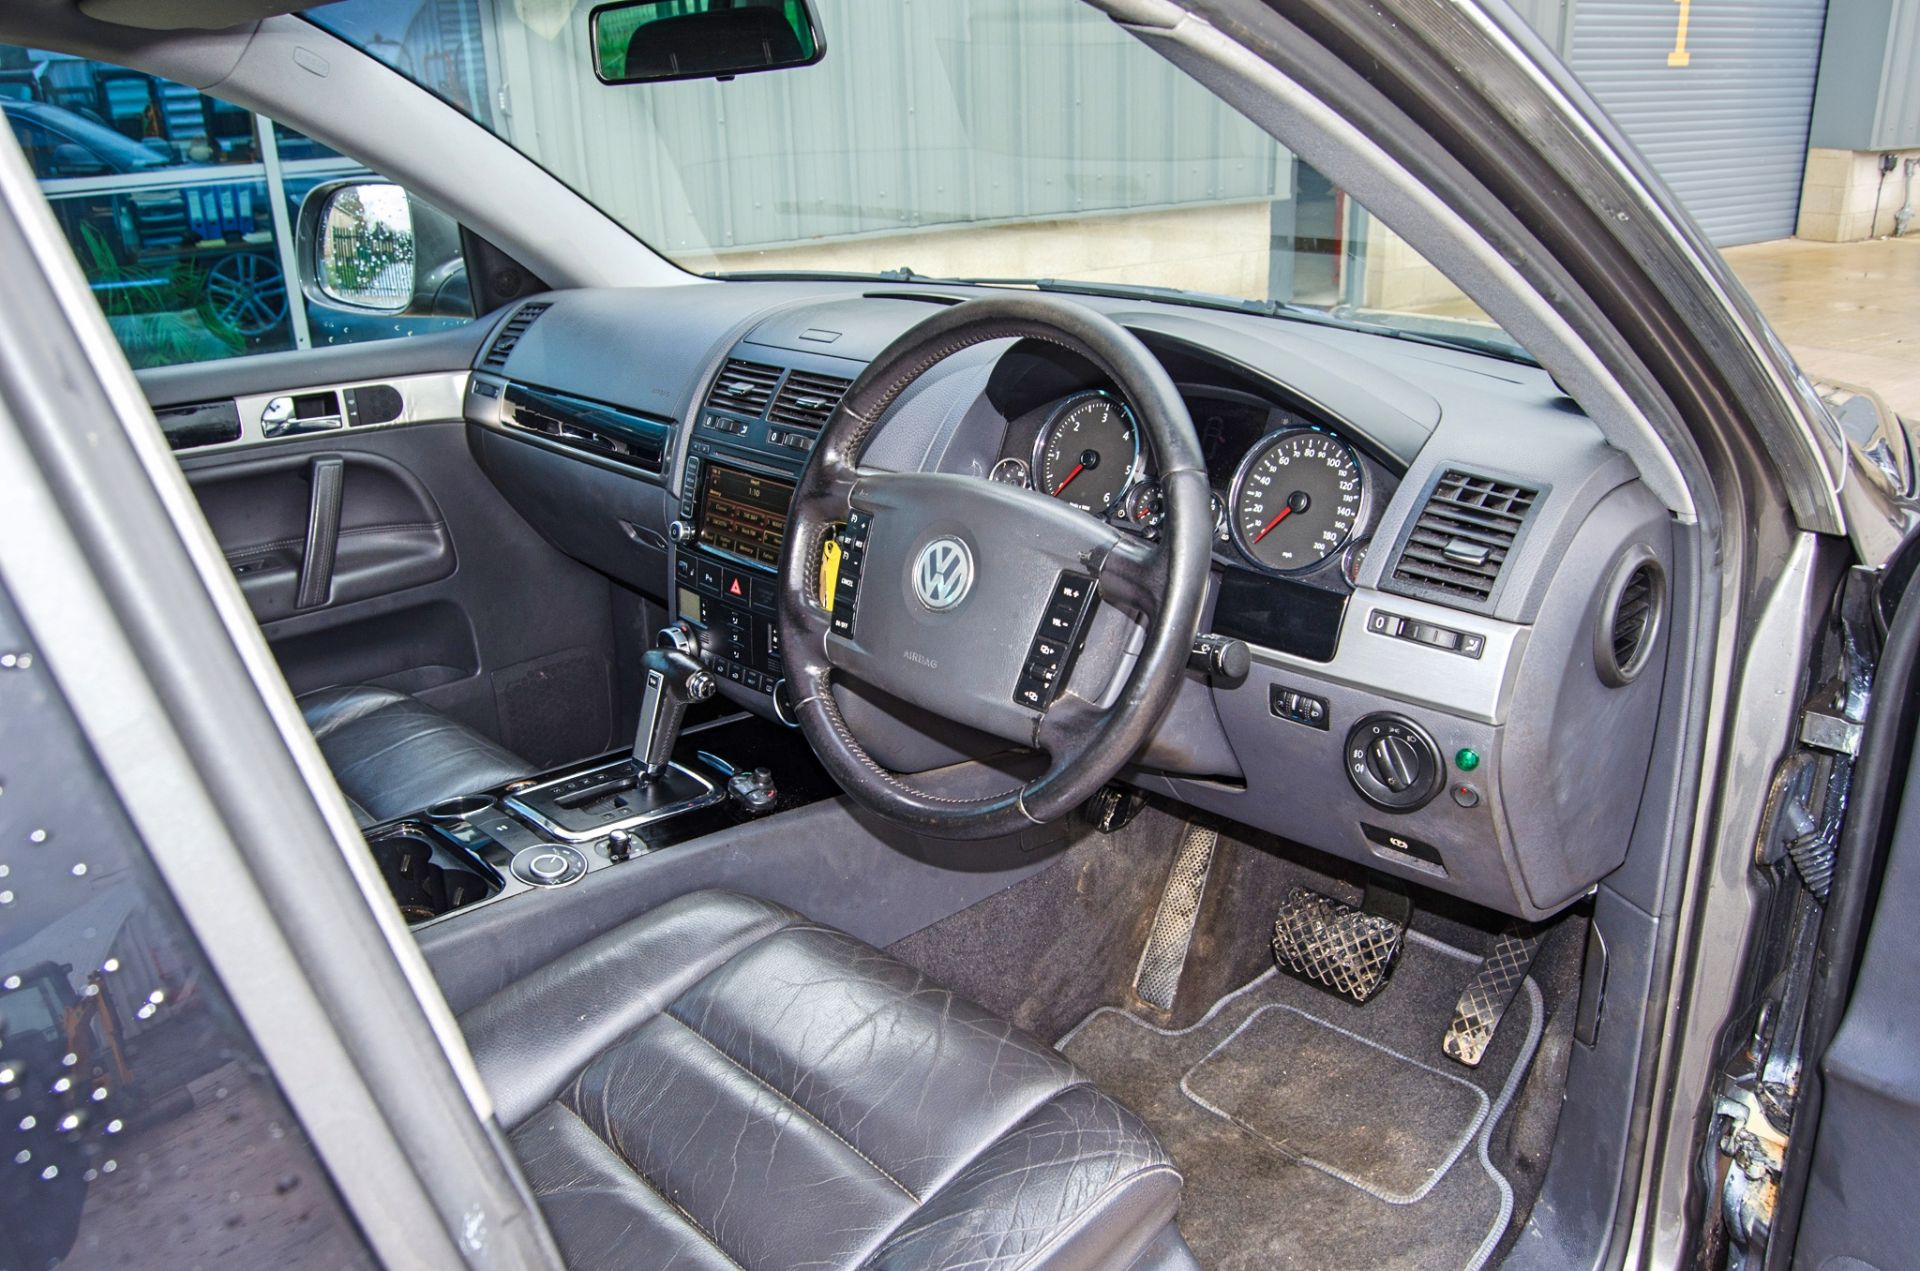 Volkswagen Touareg Altitude V6 2967cc TDi automatic 5 door estate car Registration Number: MF10 - Image 21 of 37